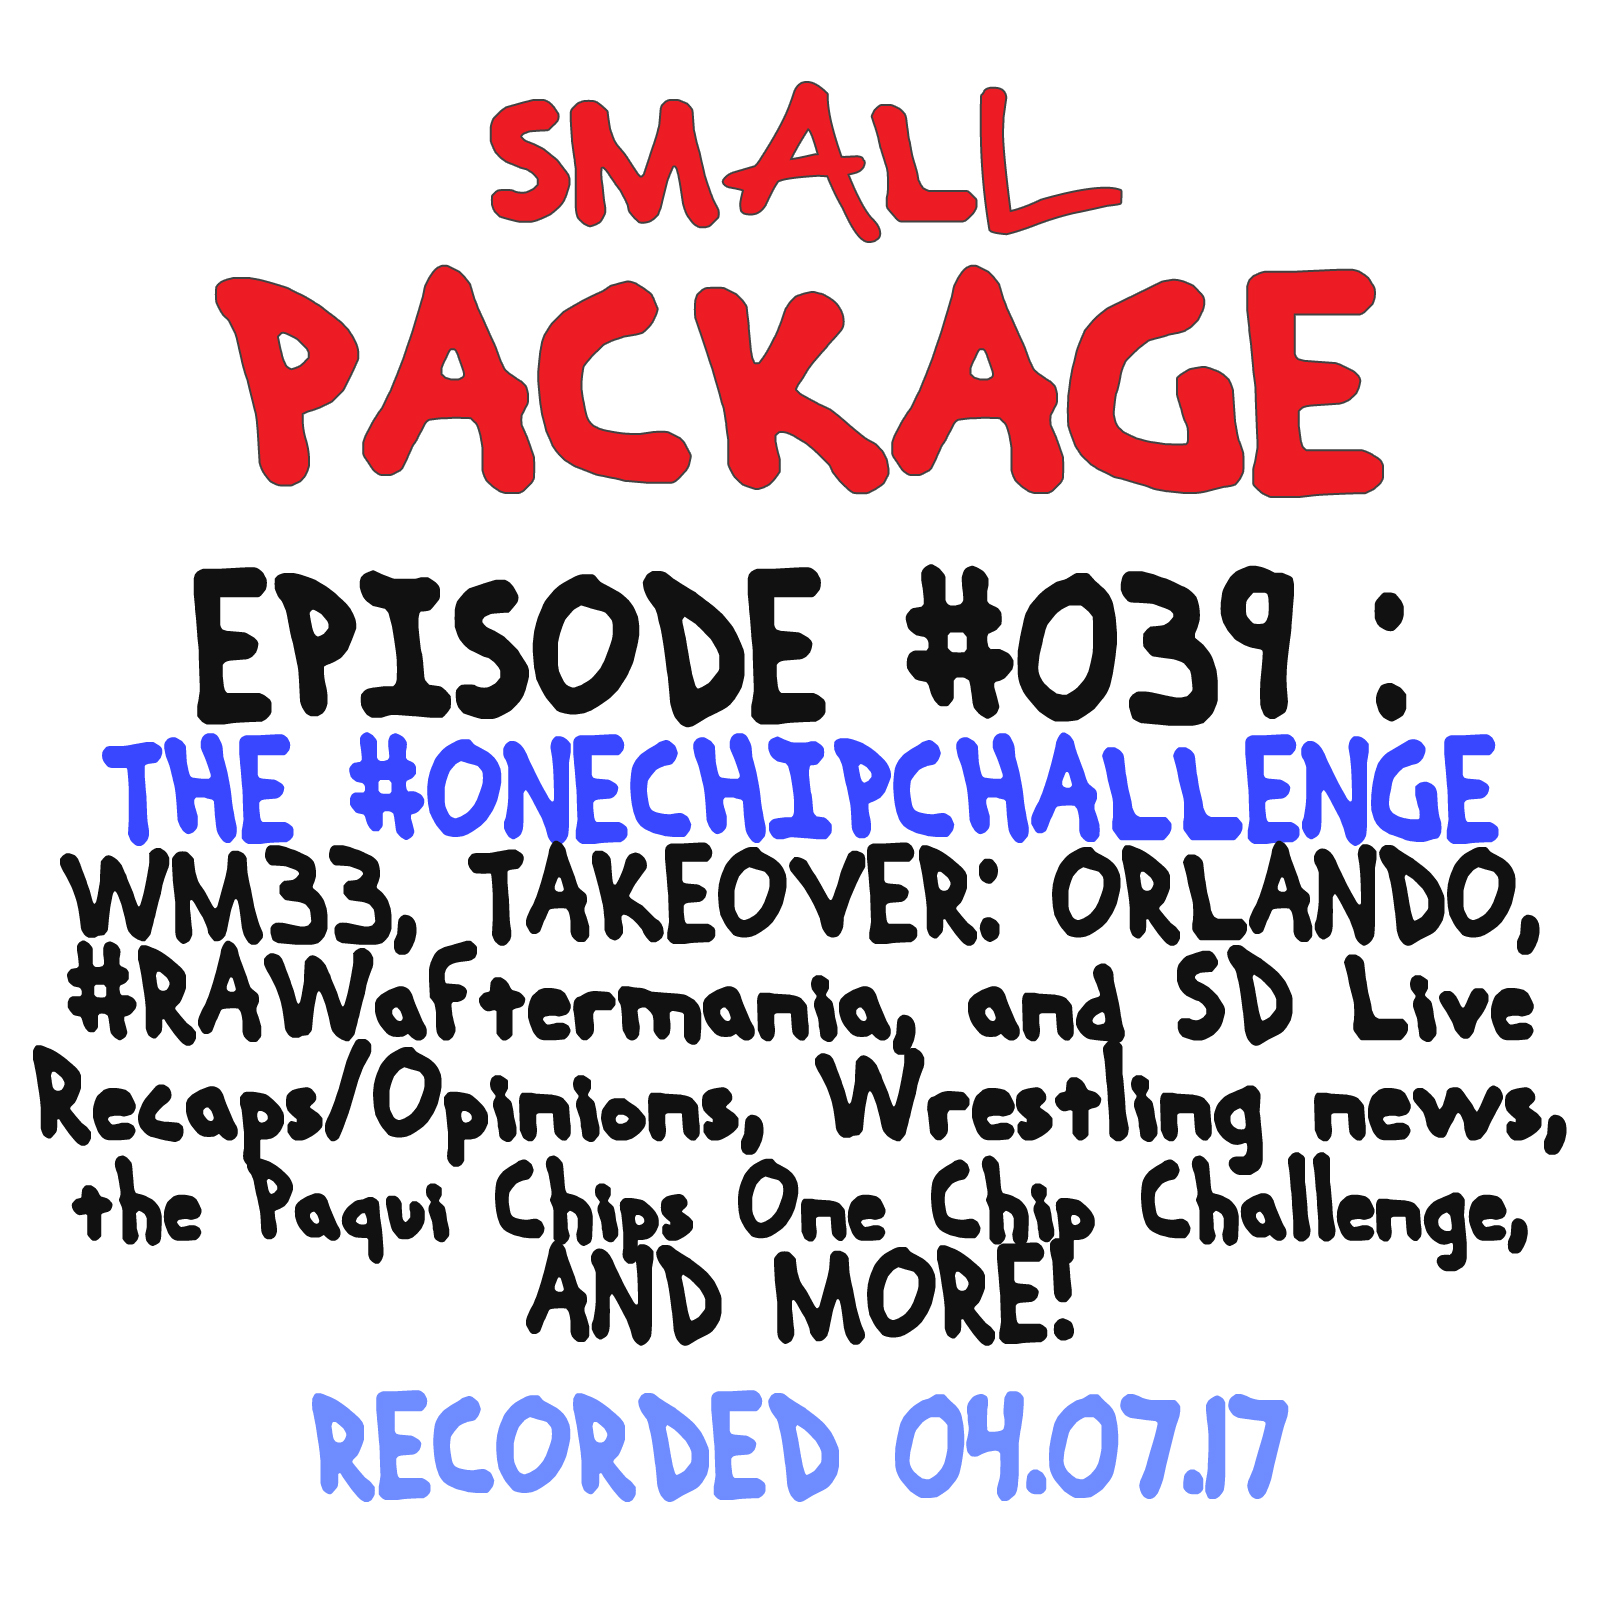 Episode 039: The #OneChipChallenge [04/07/17]